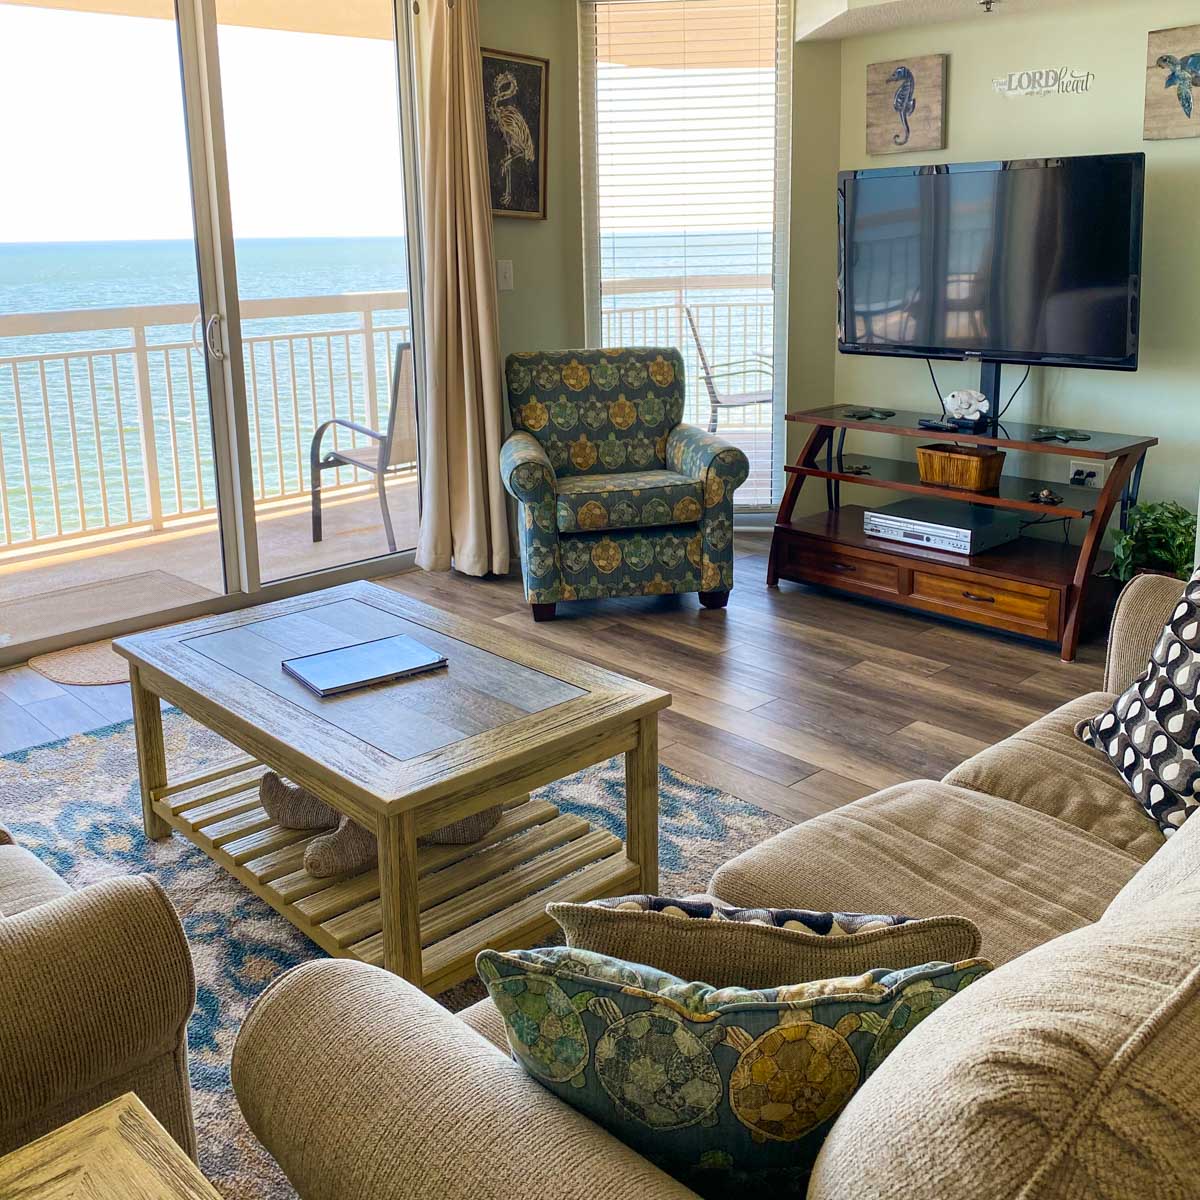 The living room of a beach condo overlooks the ocean.